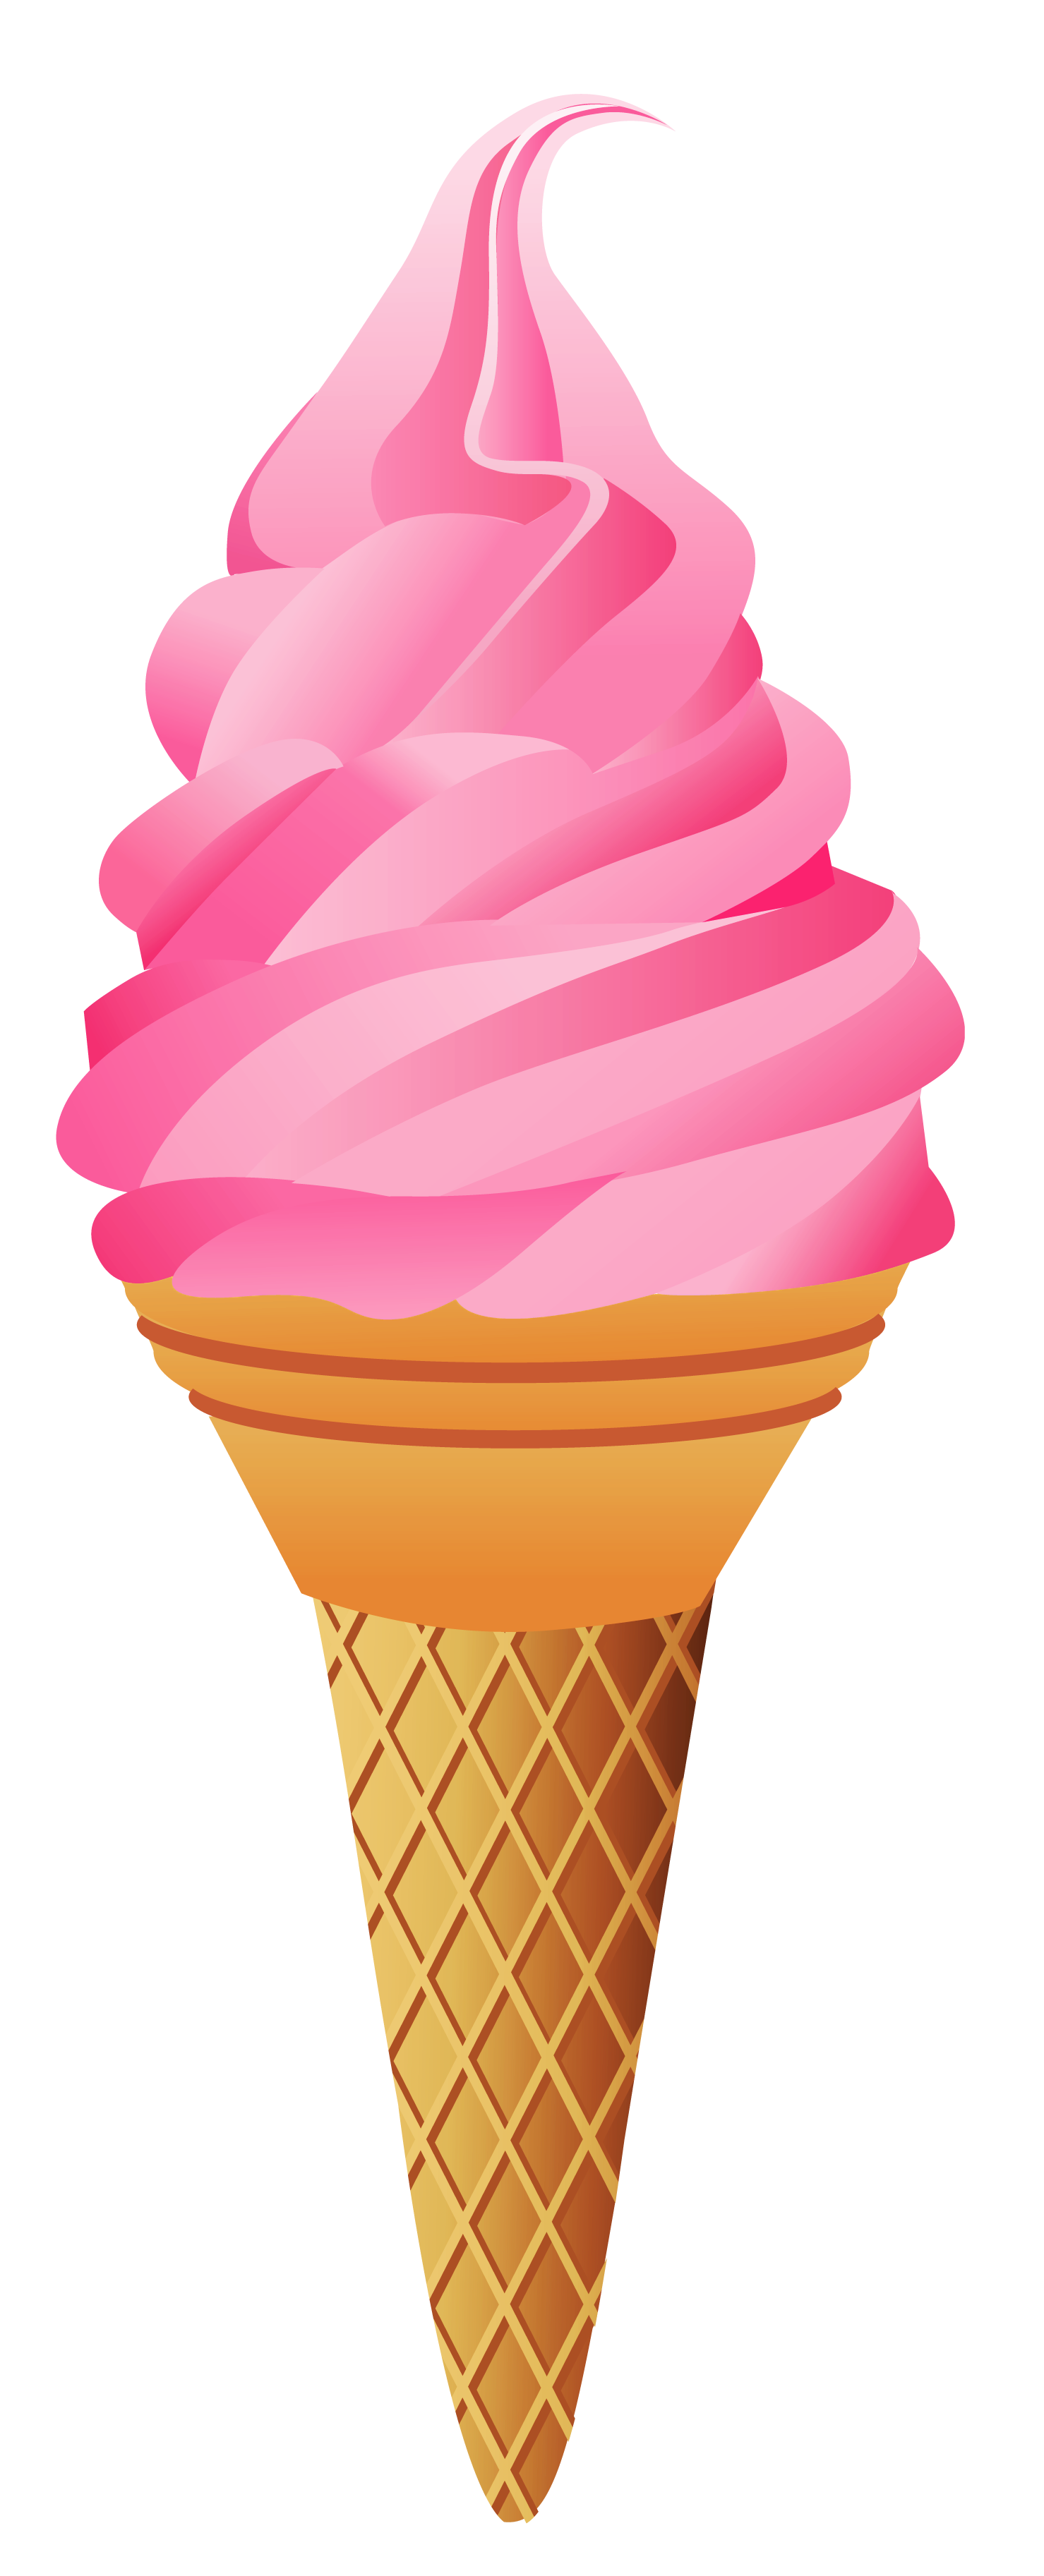 Ice cream cone ice creamne clip art free image 0